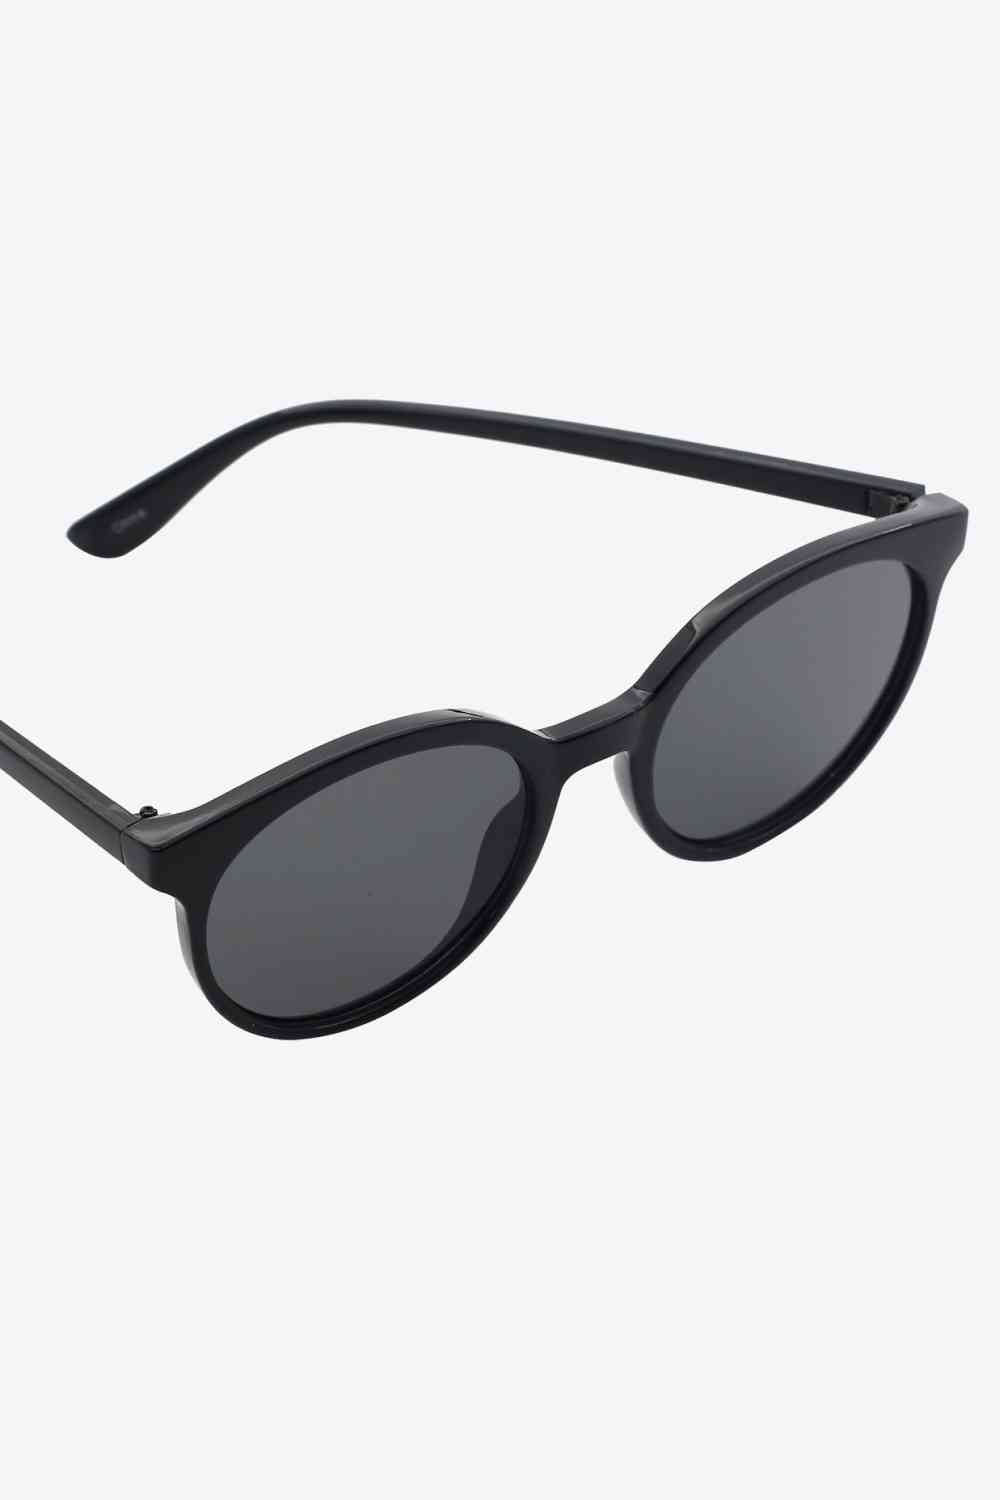 Round Full Rim Polycarbonate Frame Sunglasses - SELFTRITSS